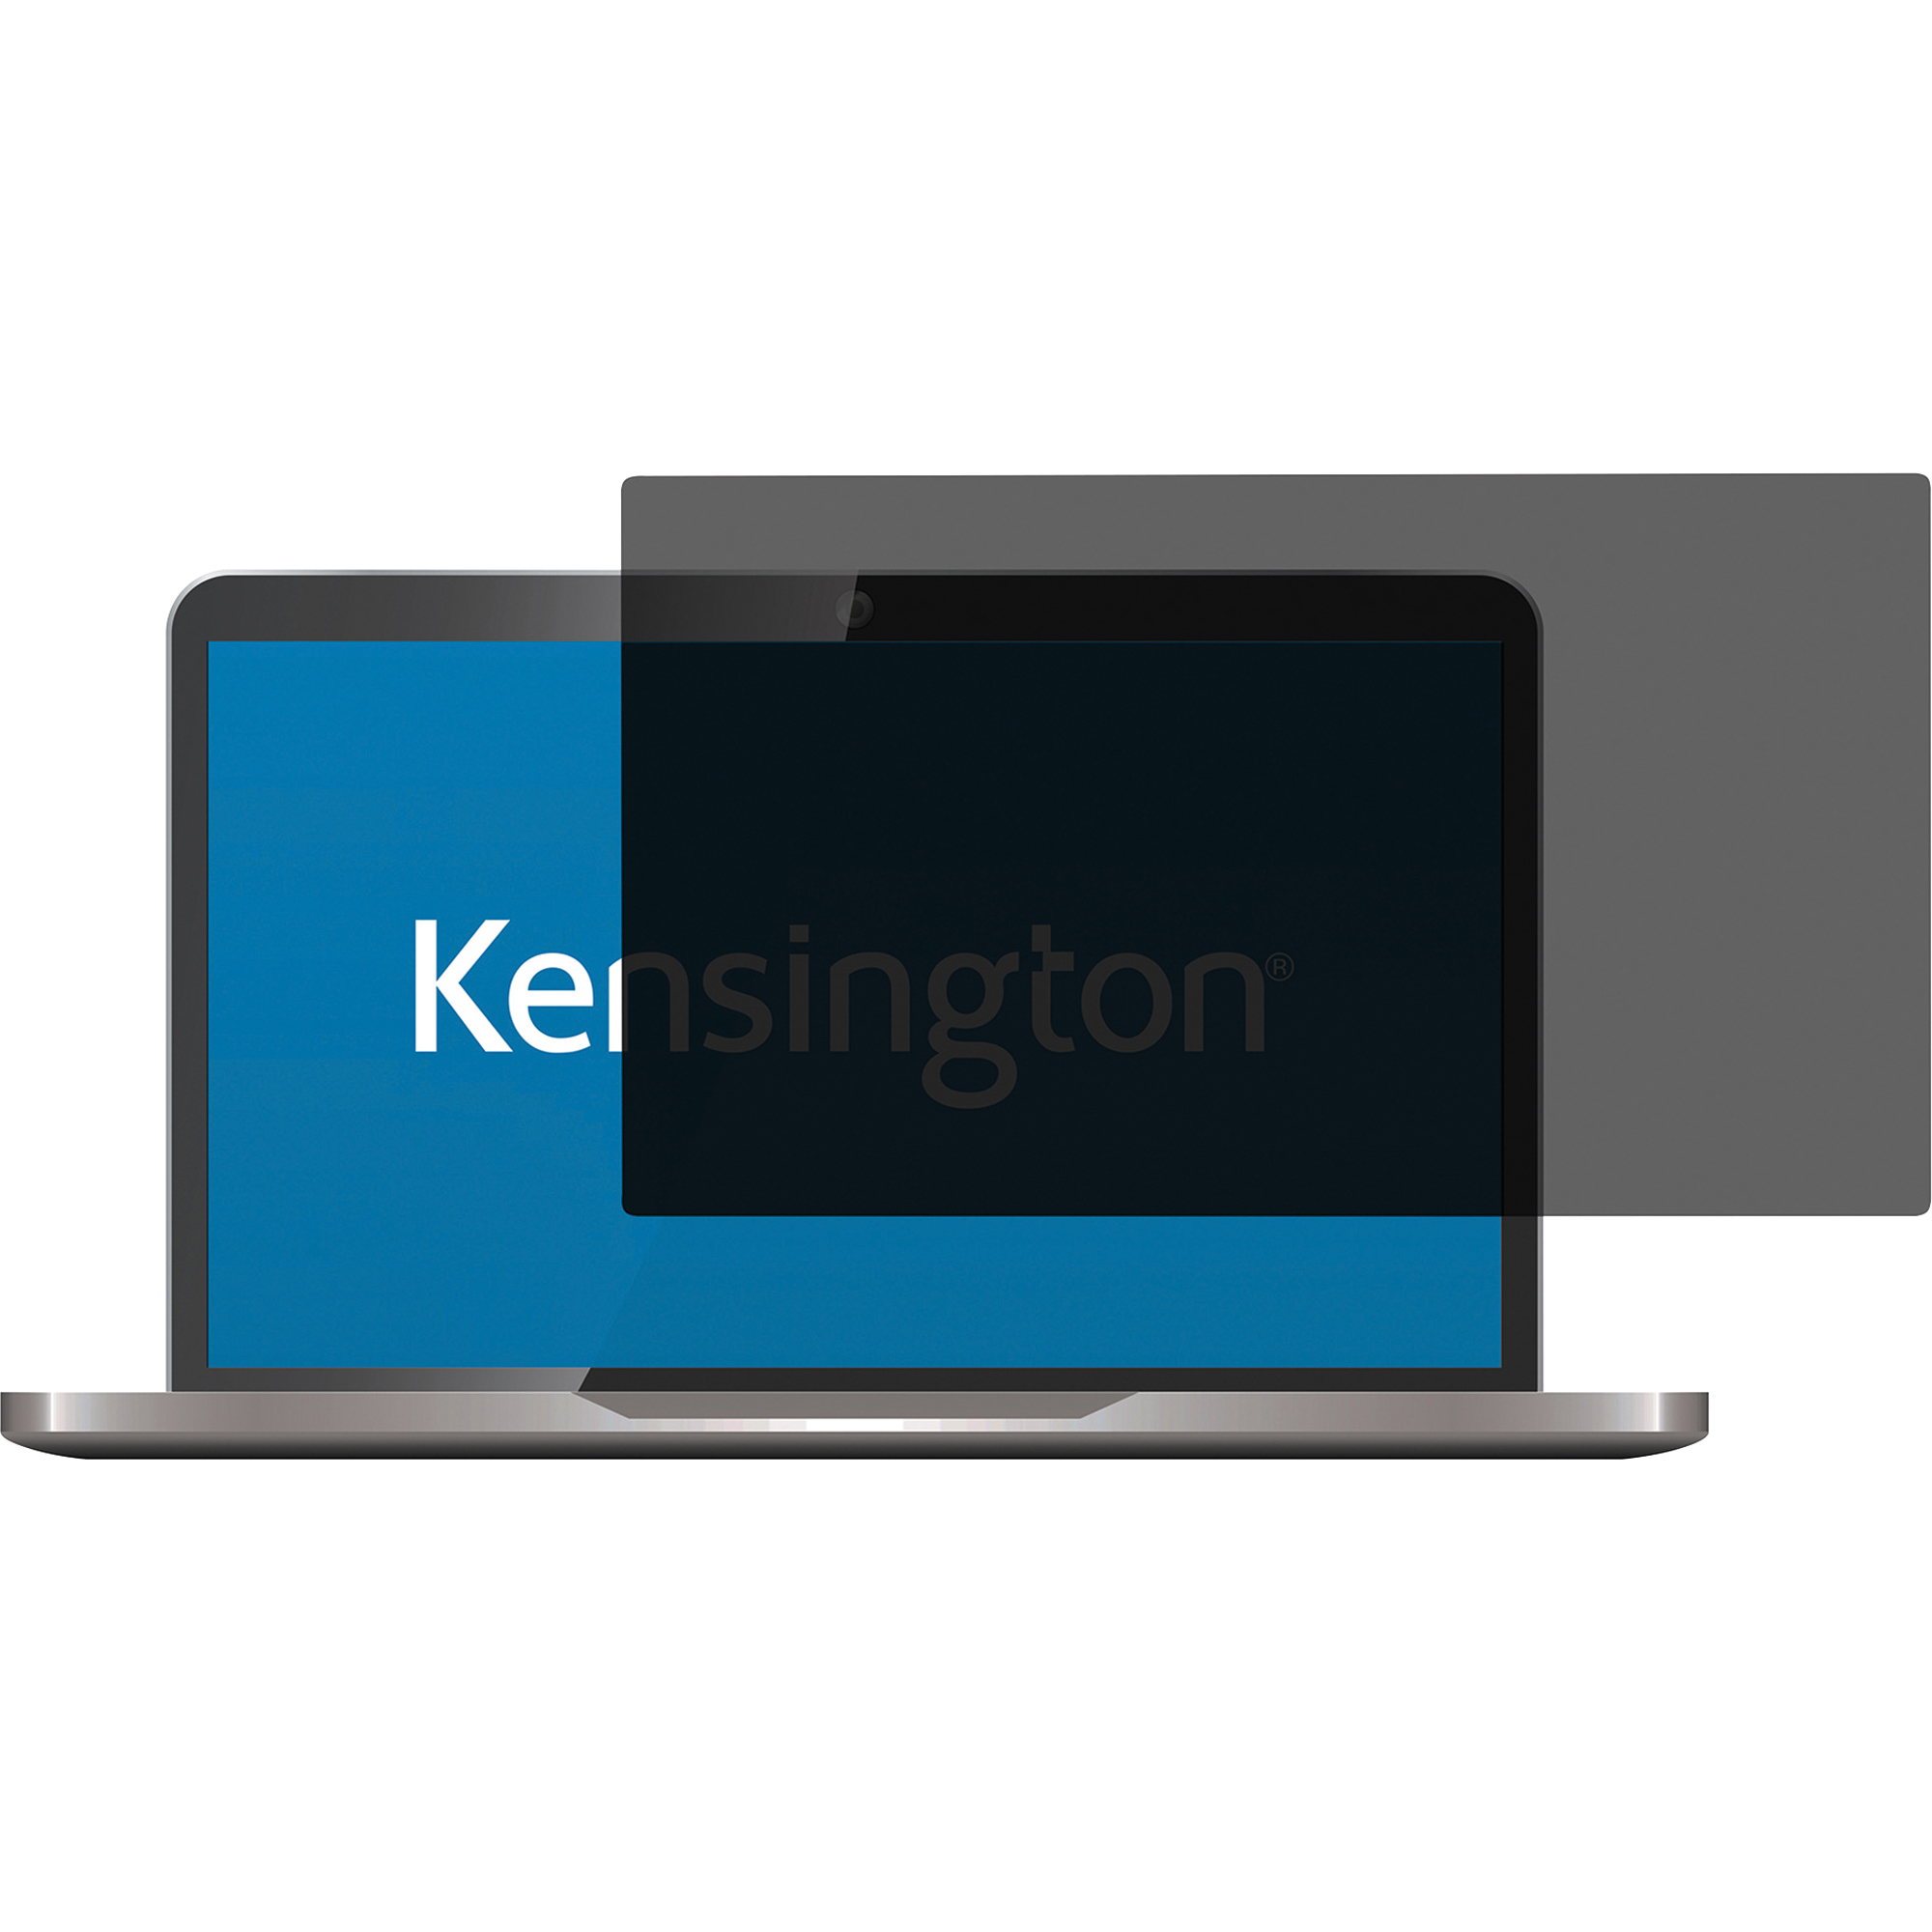 Kensington Bildschirmfilter für Laptops 12,5 Zoll